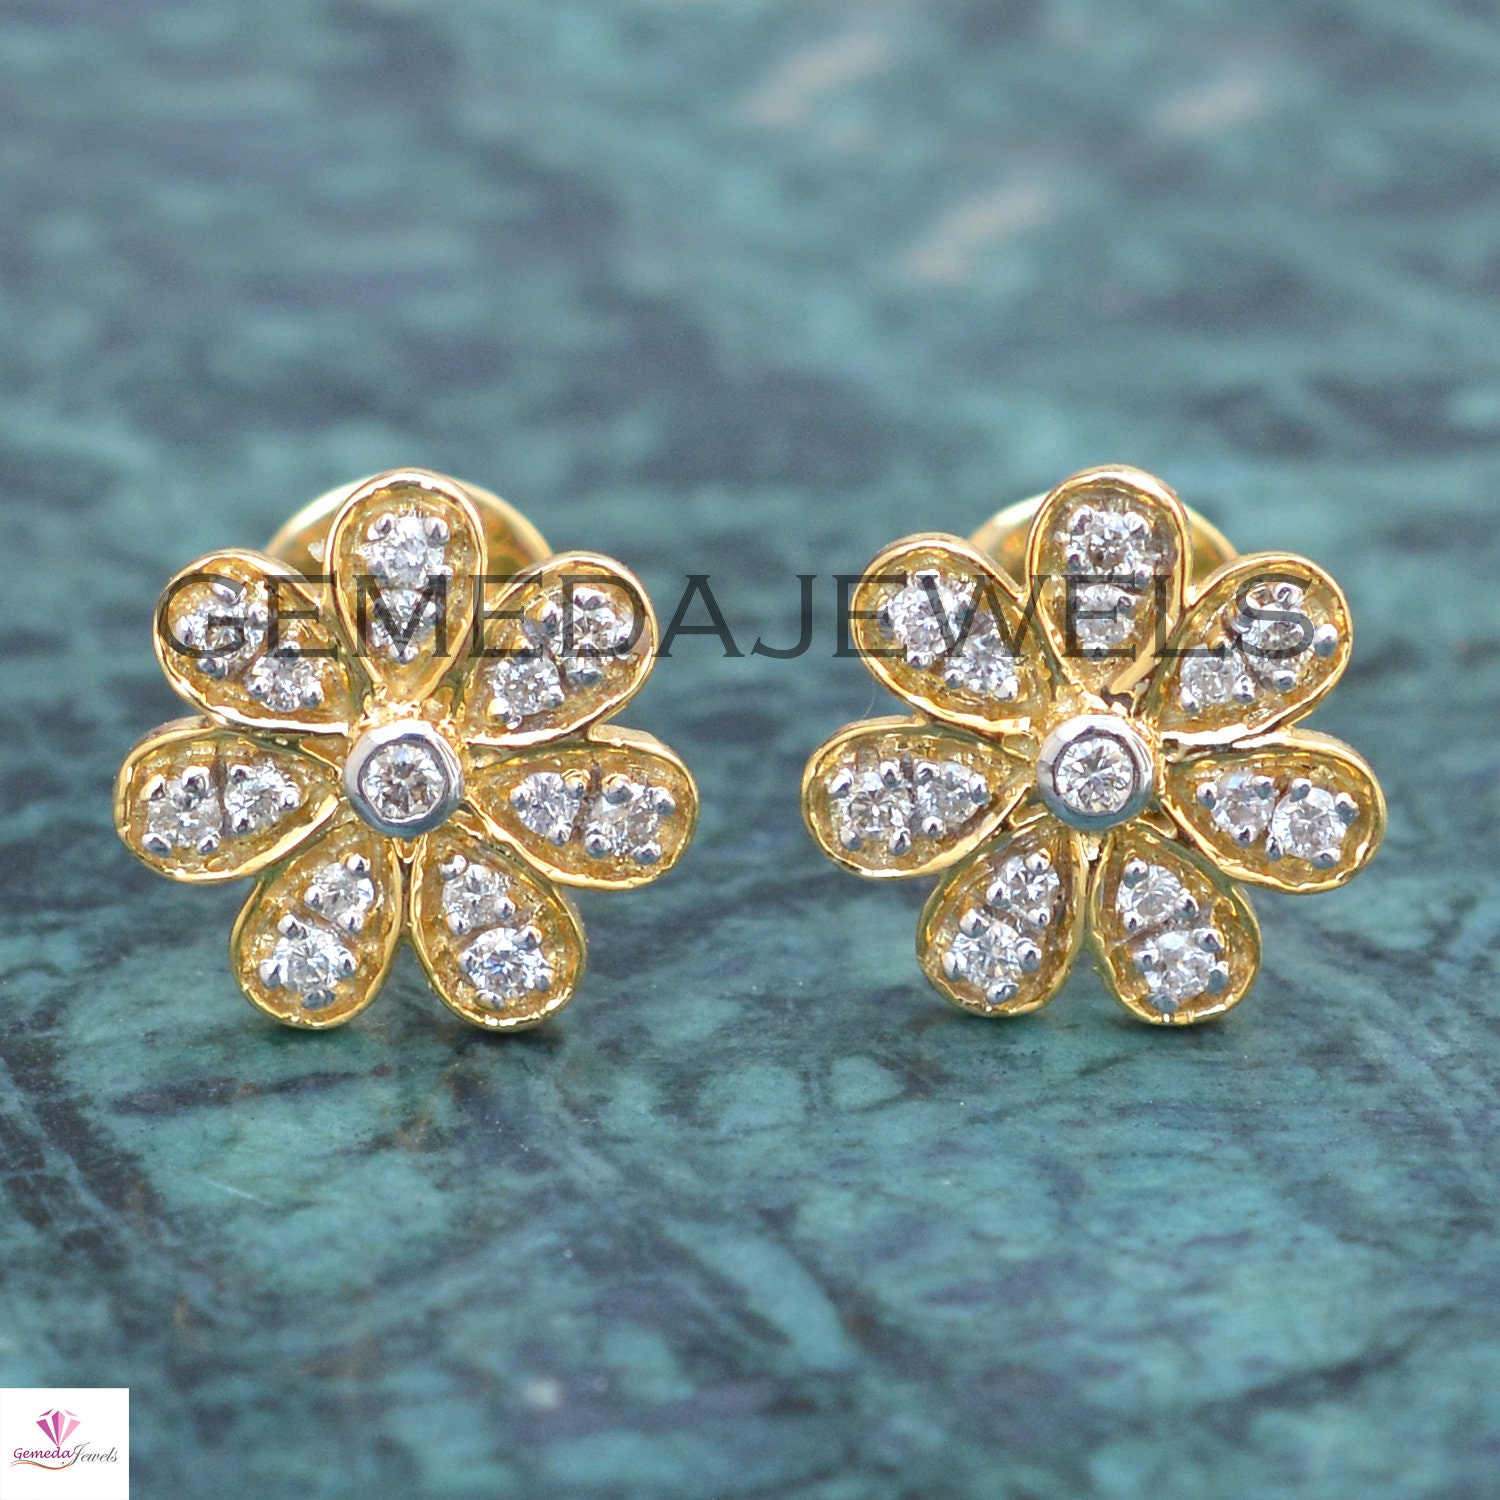 Sale Genuine Pave Diamond Flower Earring 14k Yellow Gold - Etsy